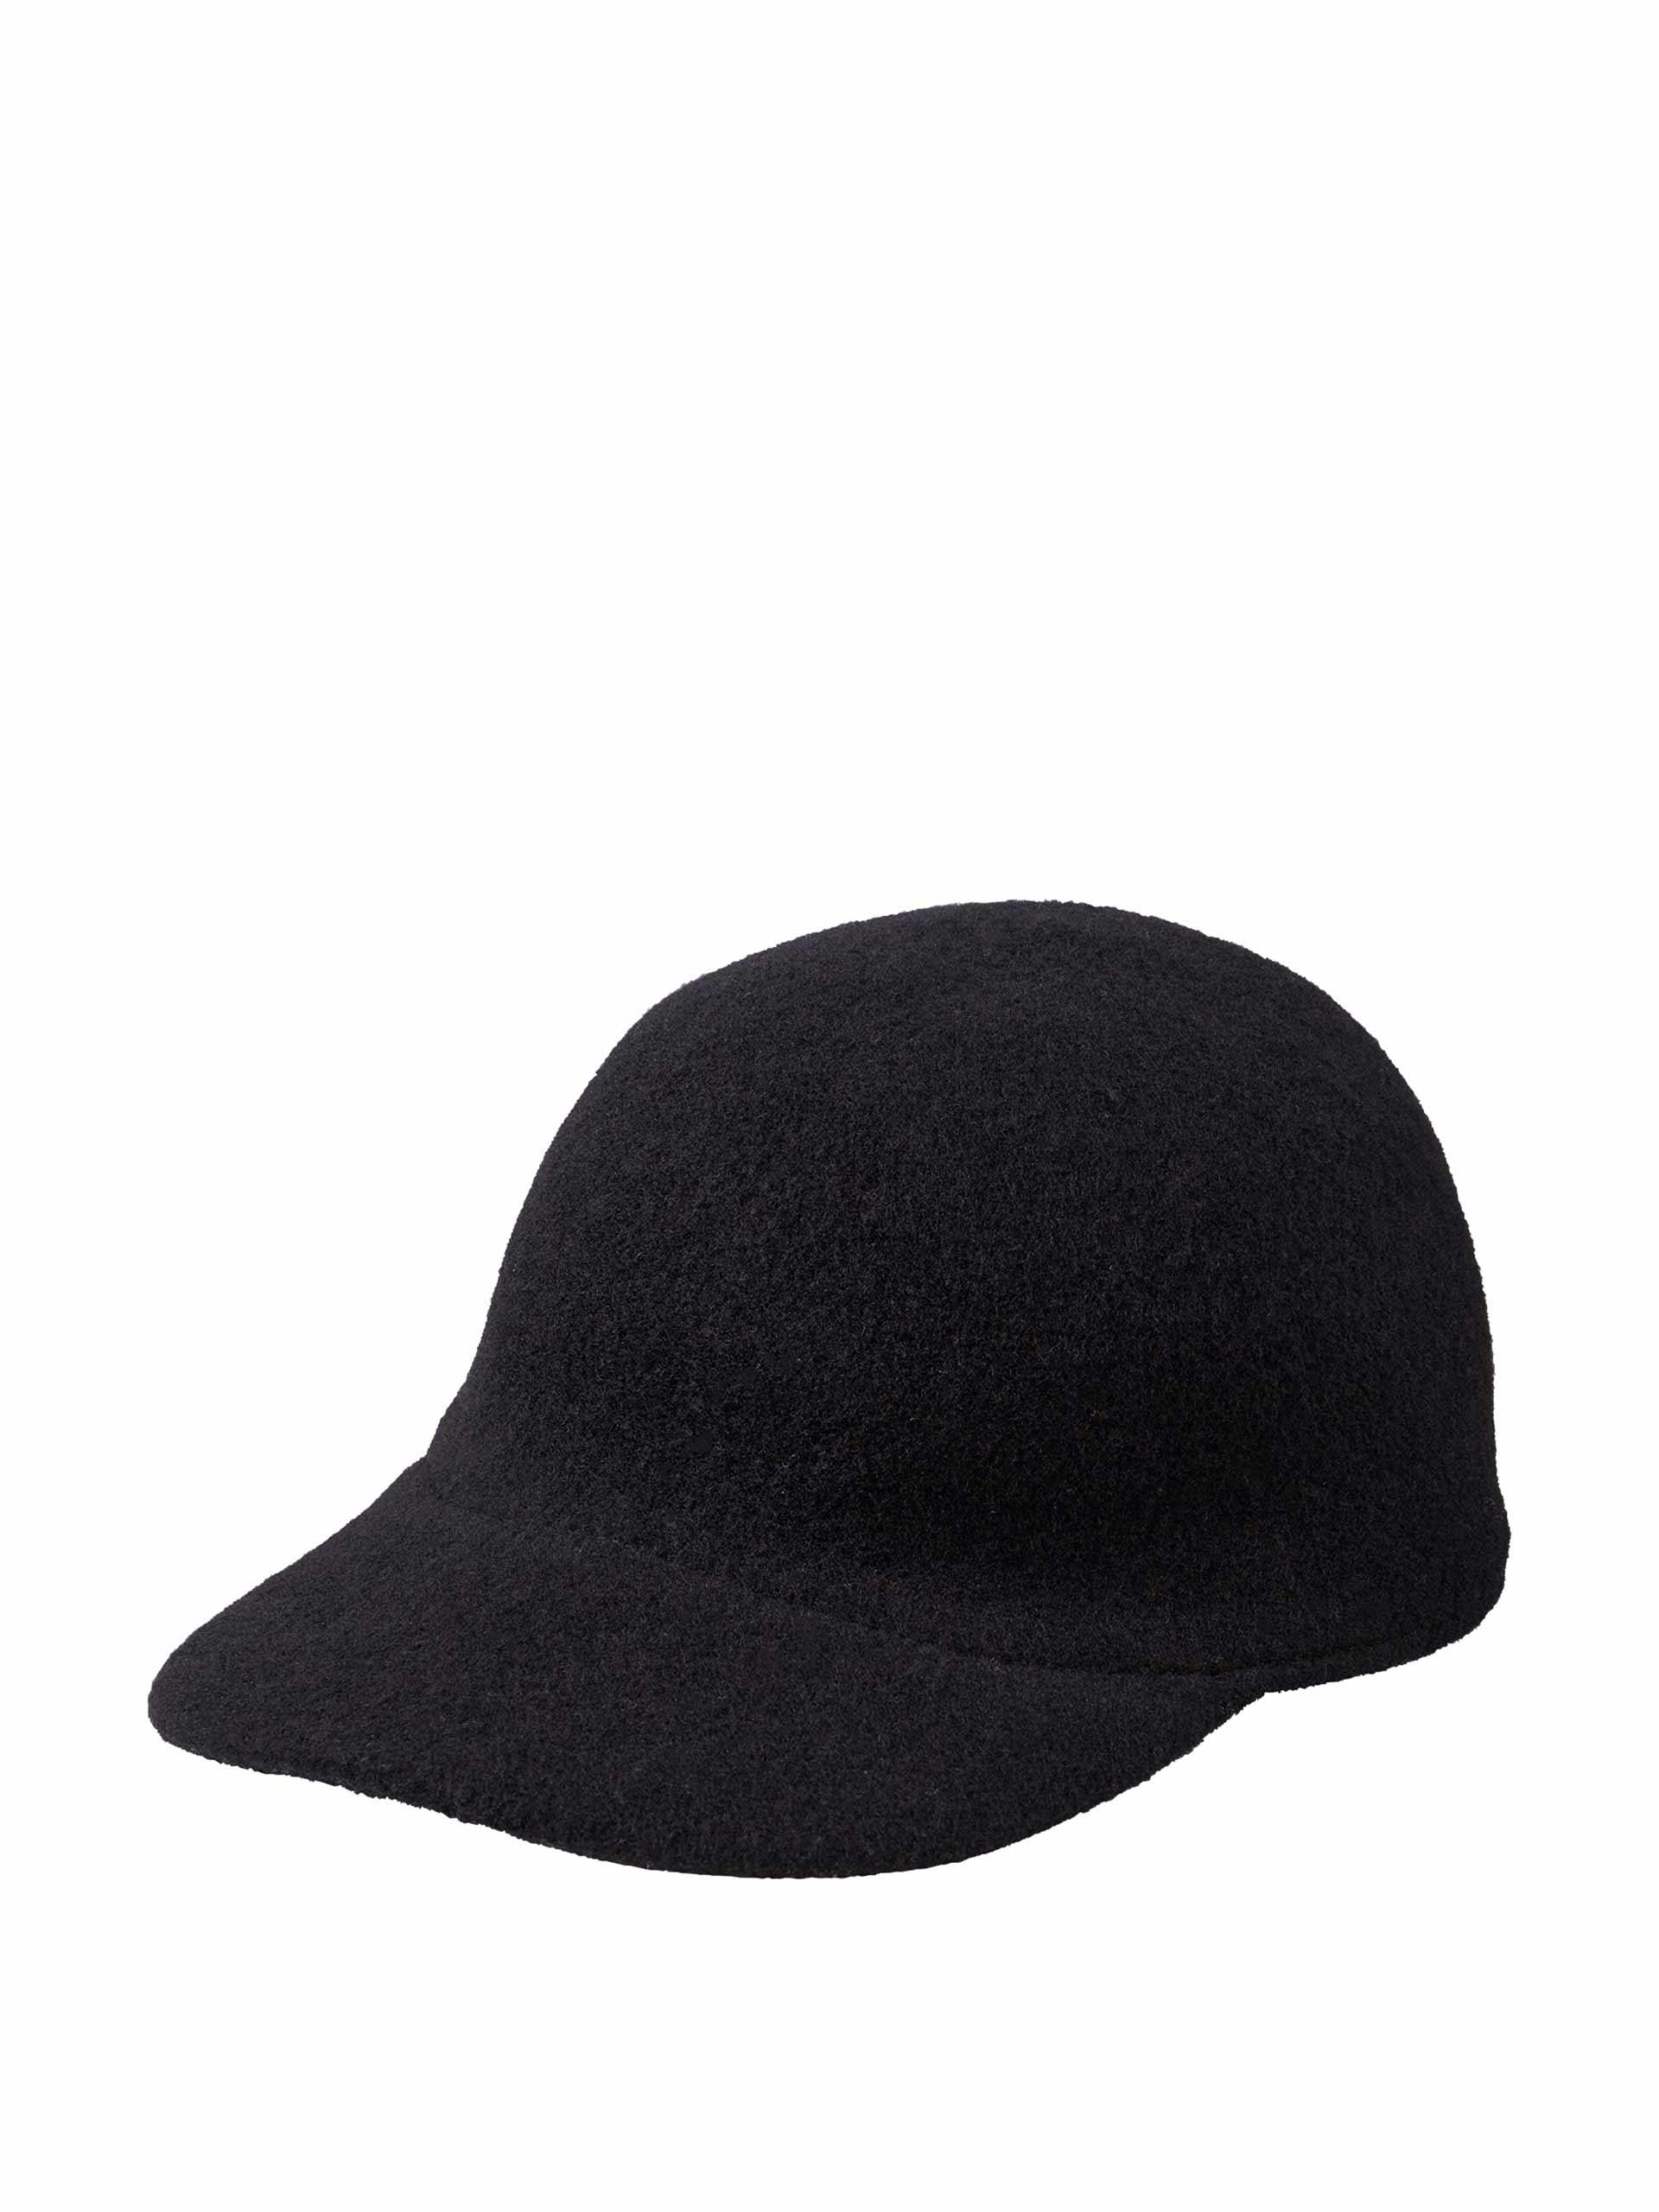 Black adjustable wool cap